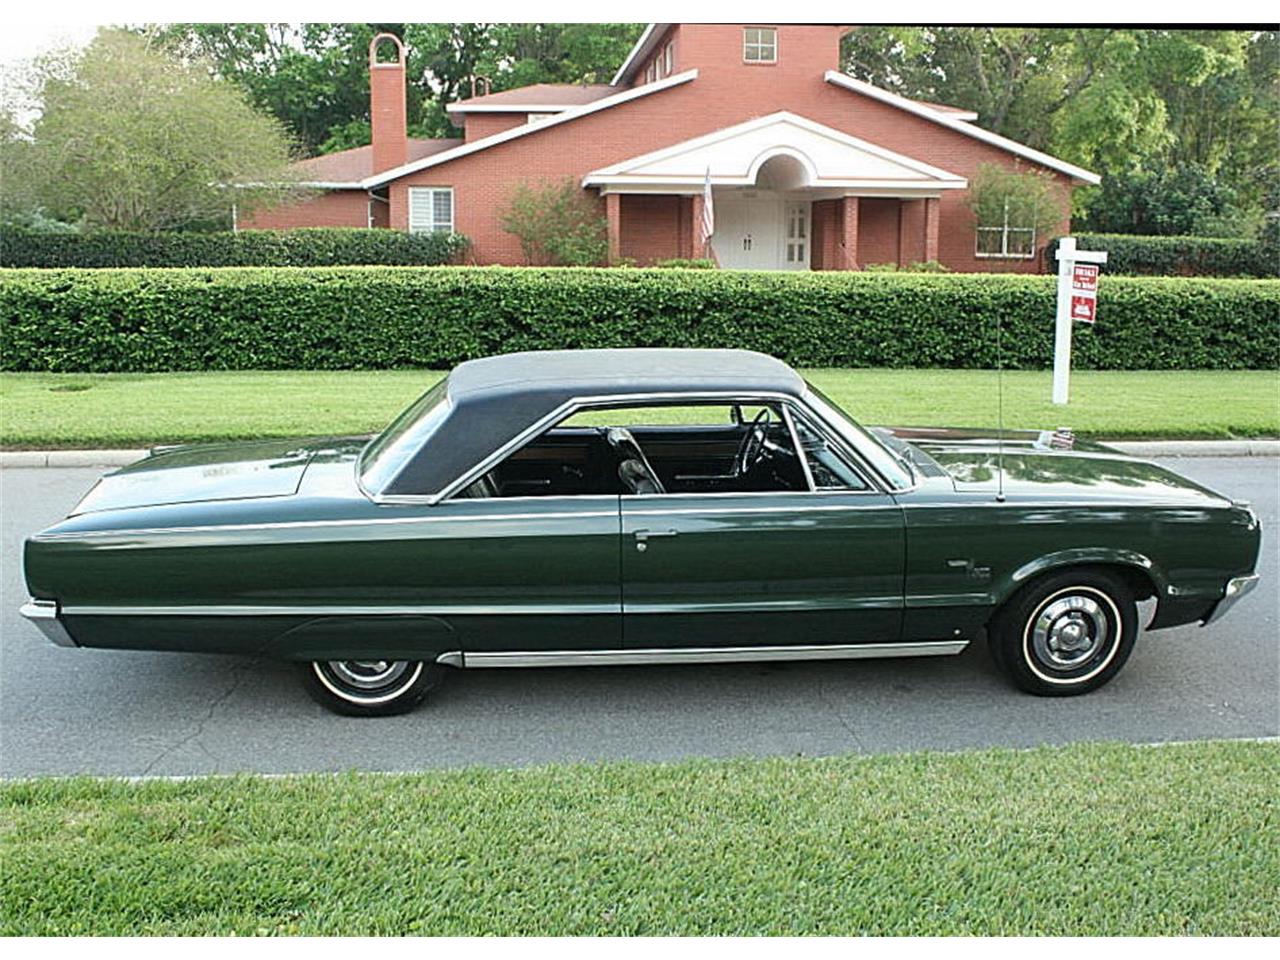 1965 Dodge Monaco for Sale | ClassicCars.com | CC-1076248